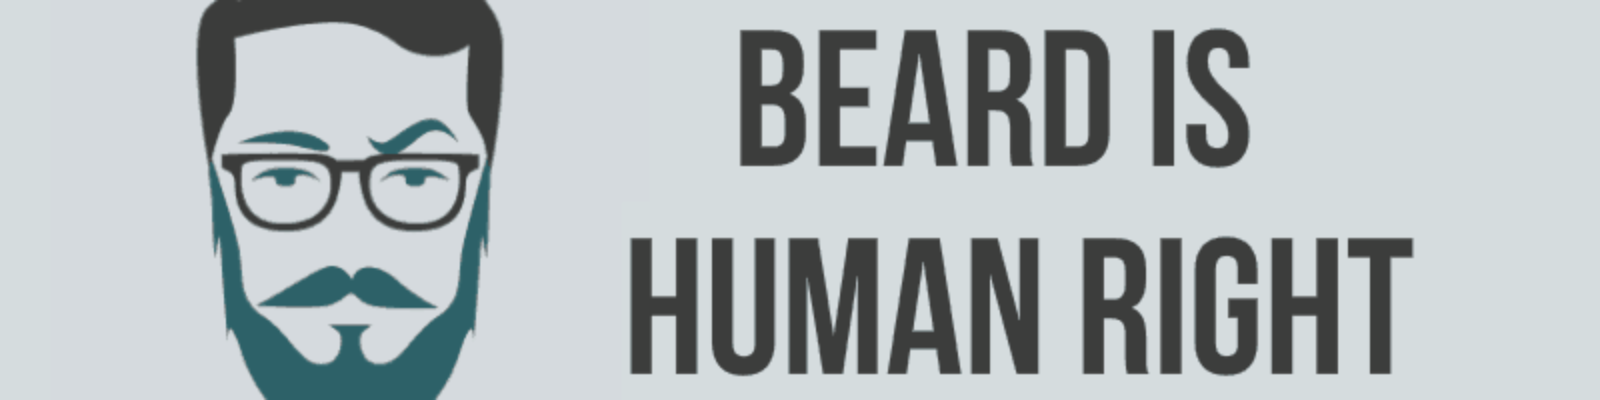 Beard is human right